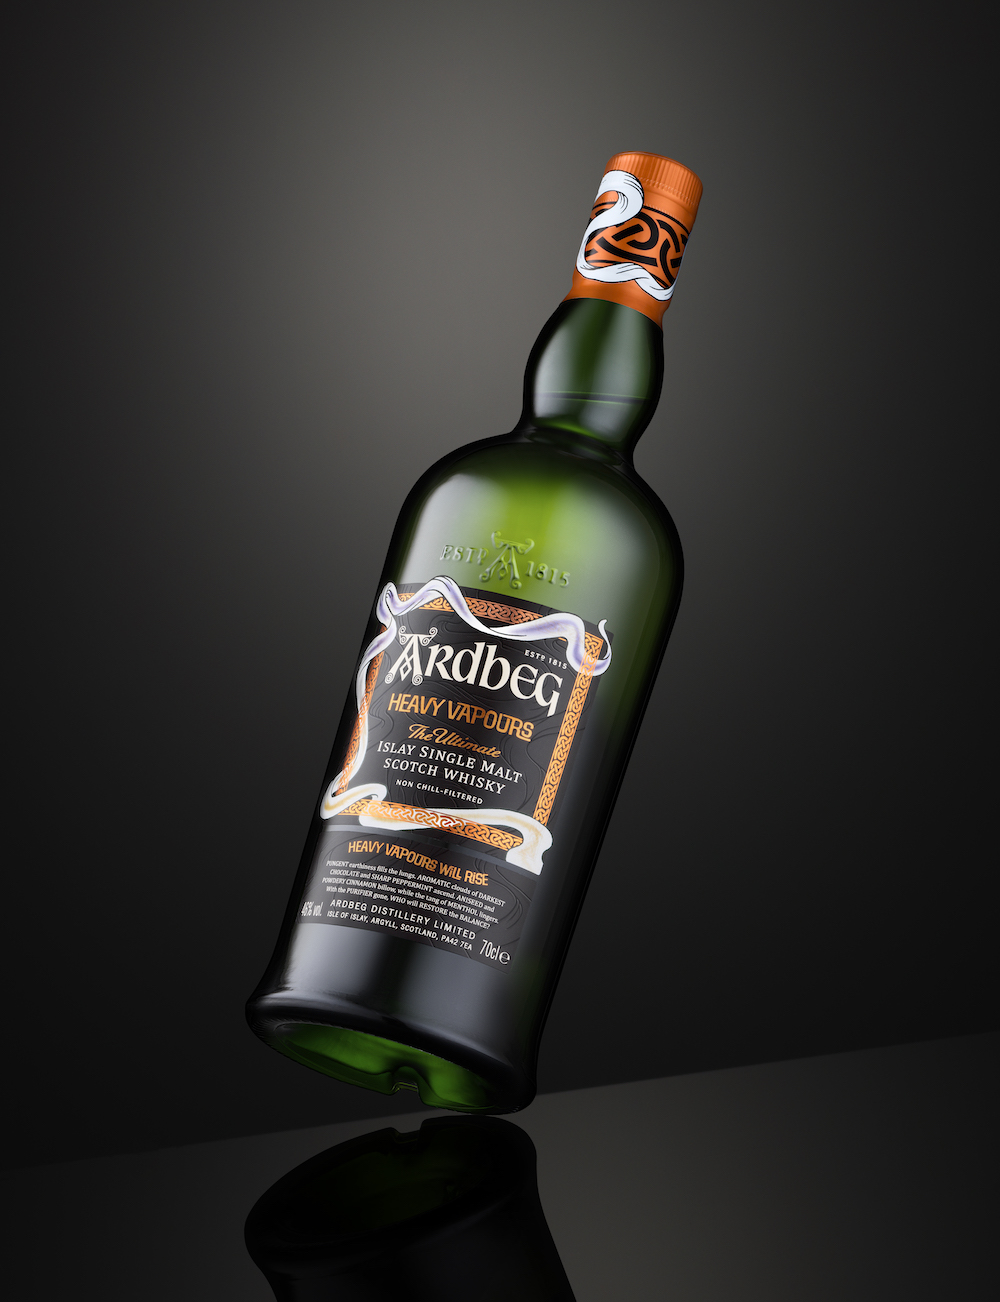 imagen 1 de Ardbeg Heavy Vapours, un whisky en edición limitada para celebrar el Ardbeg Day.